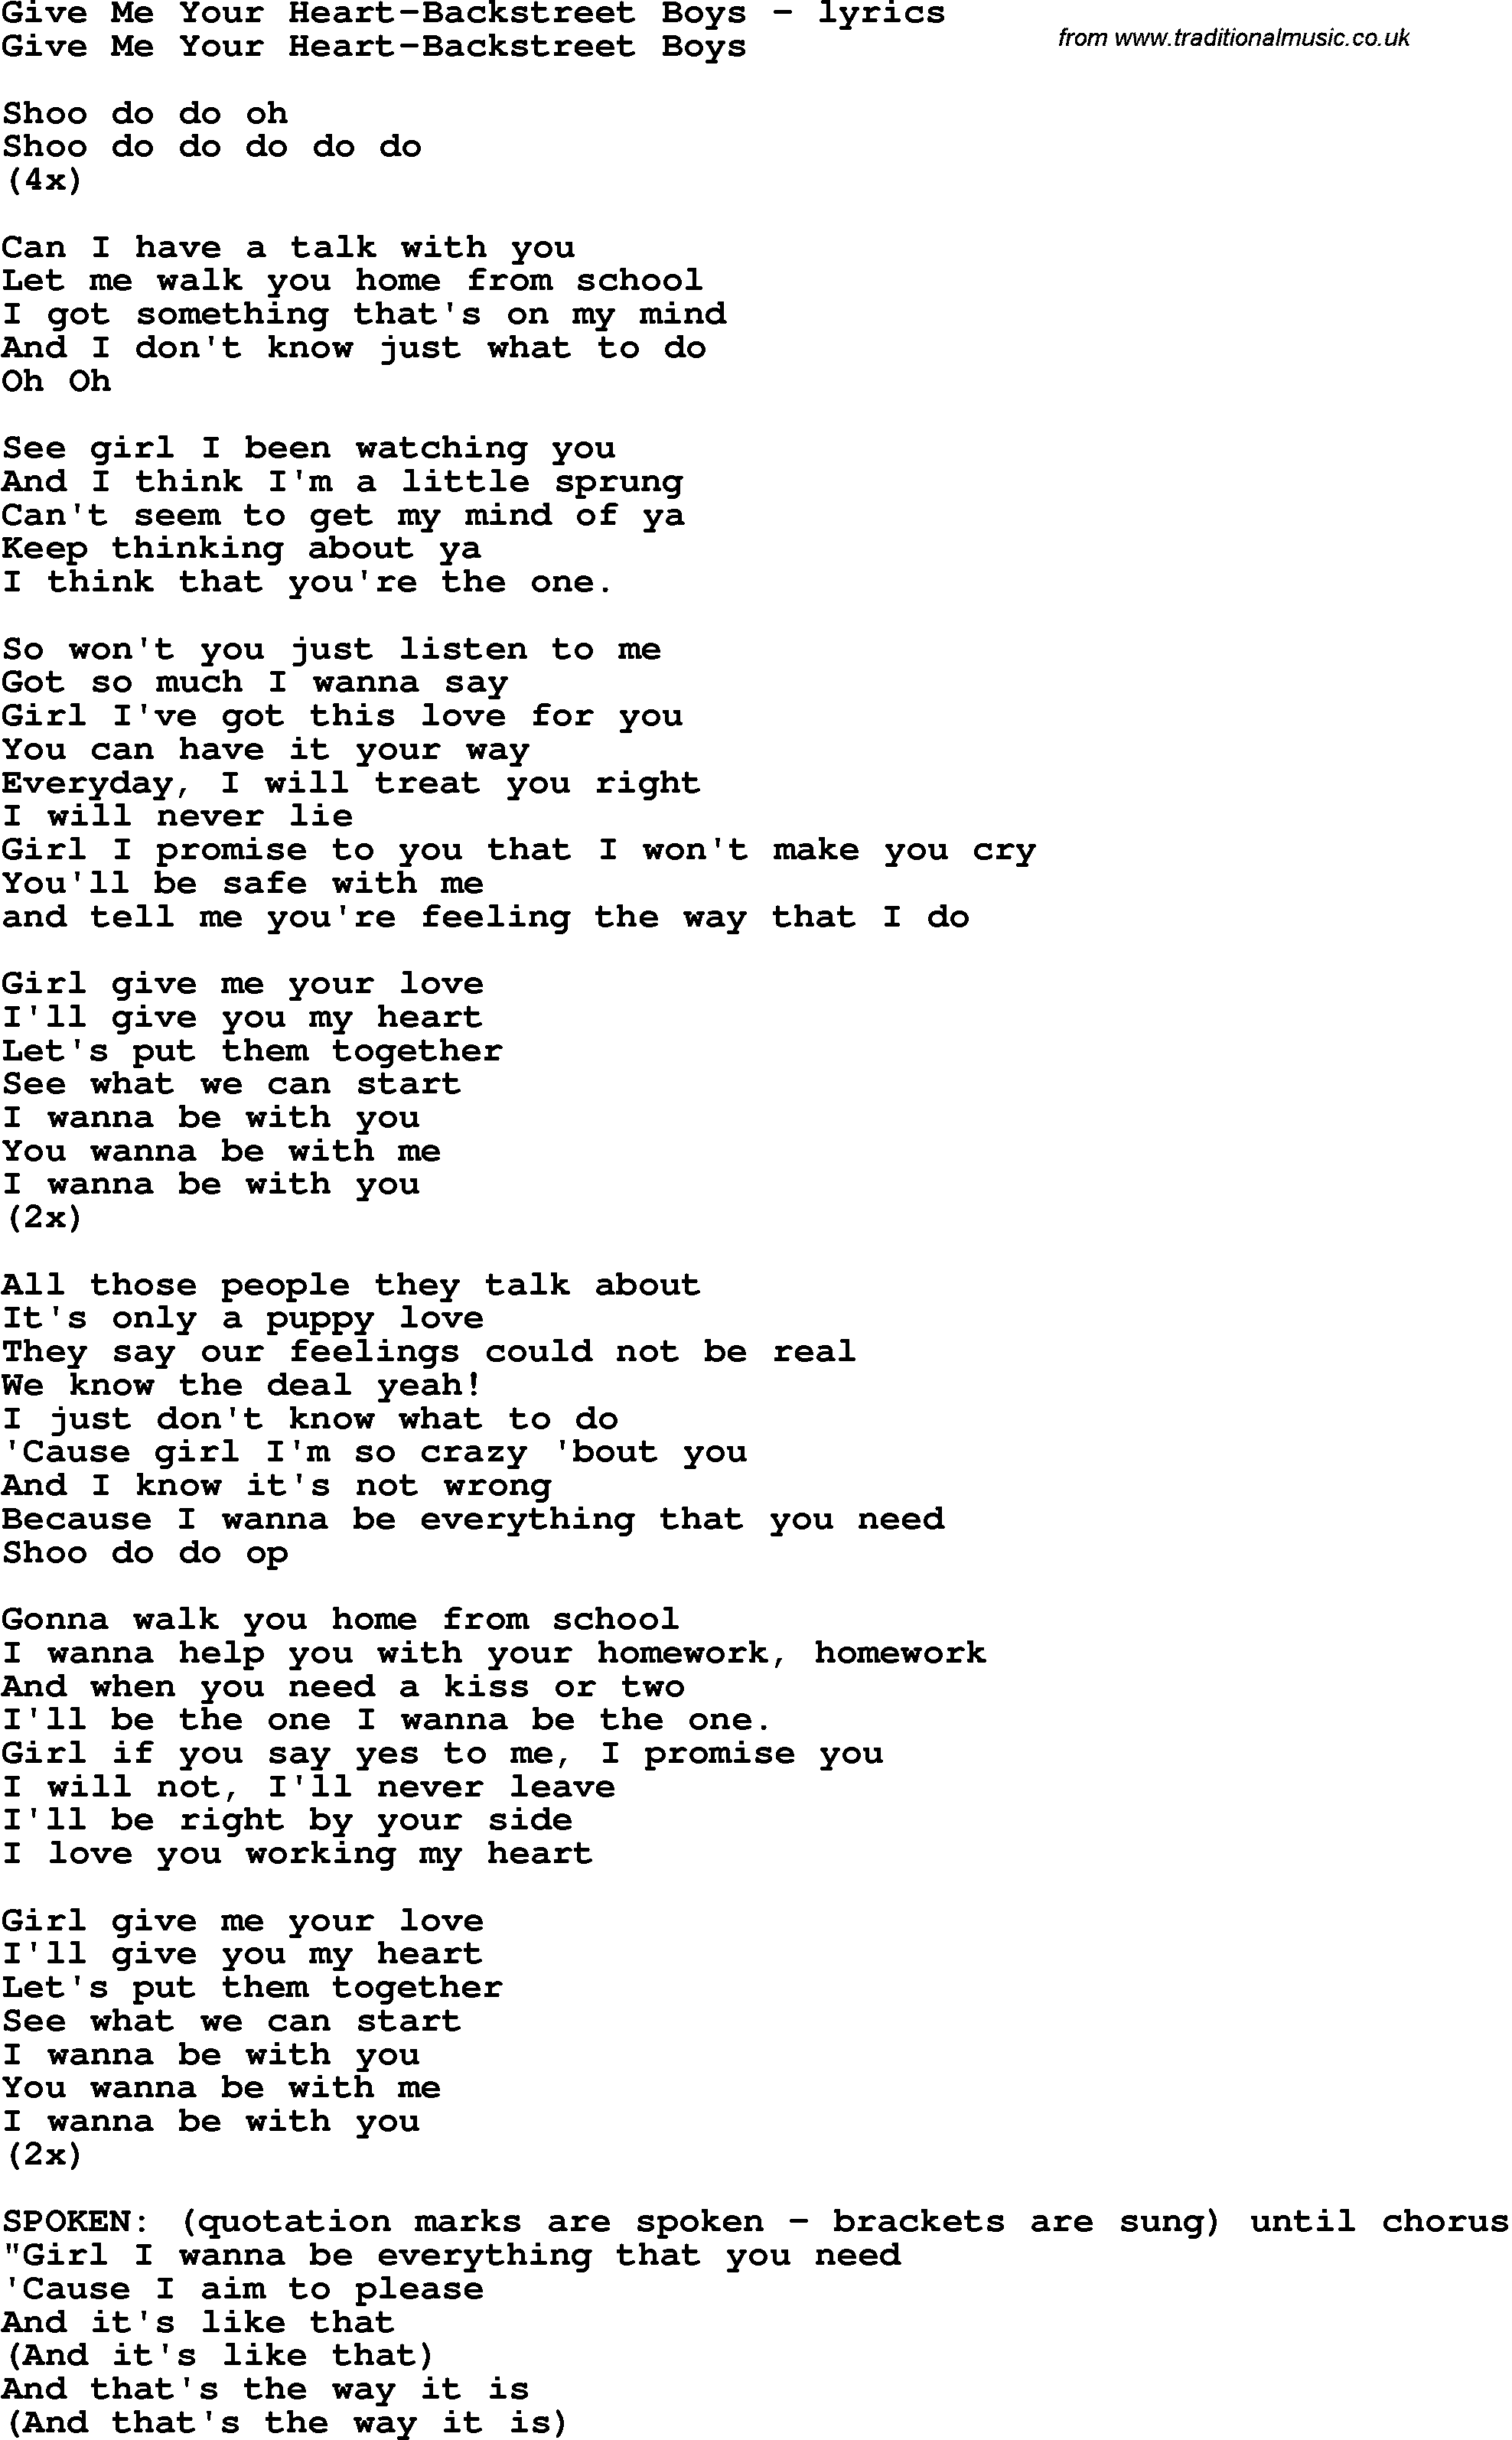 Love Song Lyrics for: Give Me Your Heart-Backstreet Boys